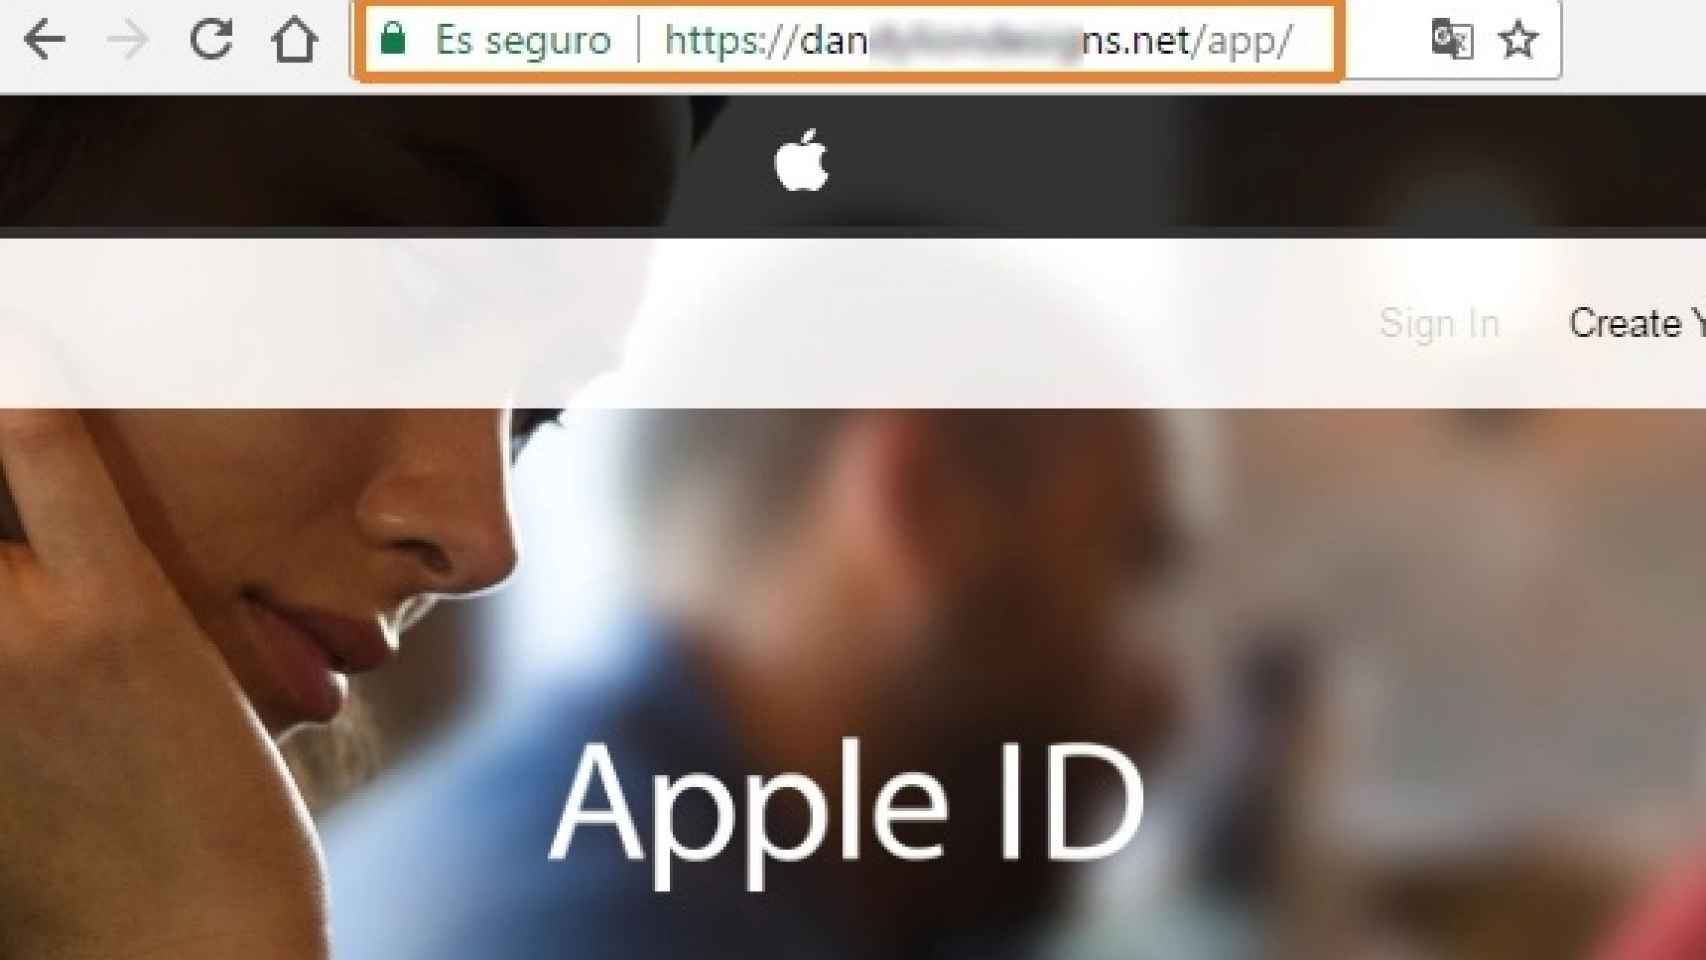 Los dominios simulan ser de Apple, pero son faltos